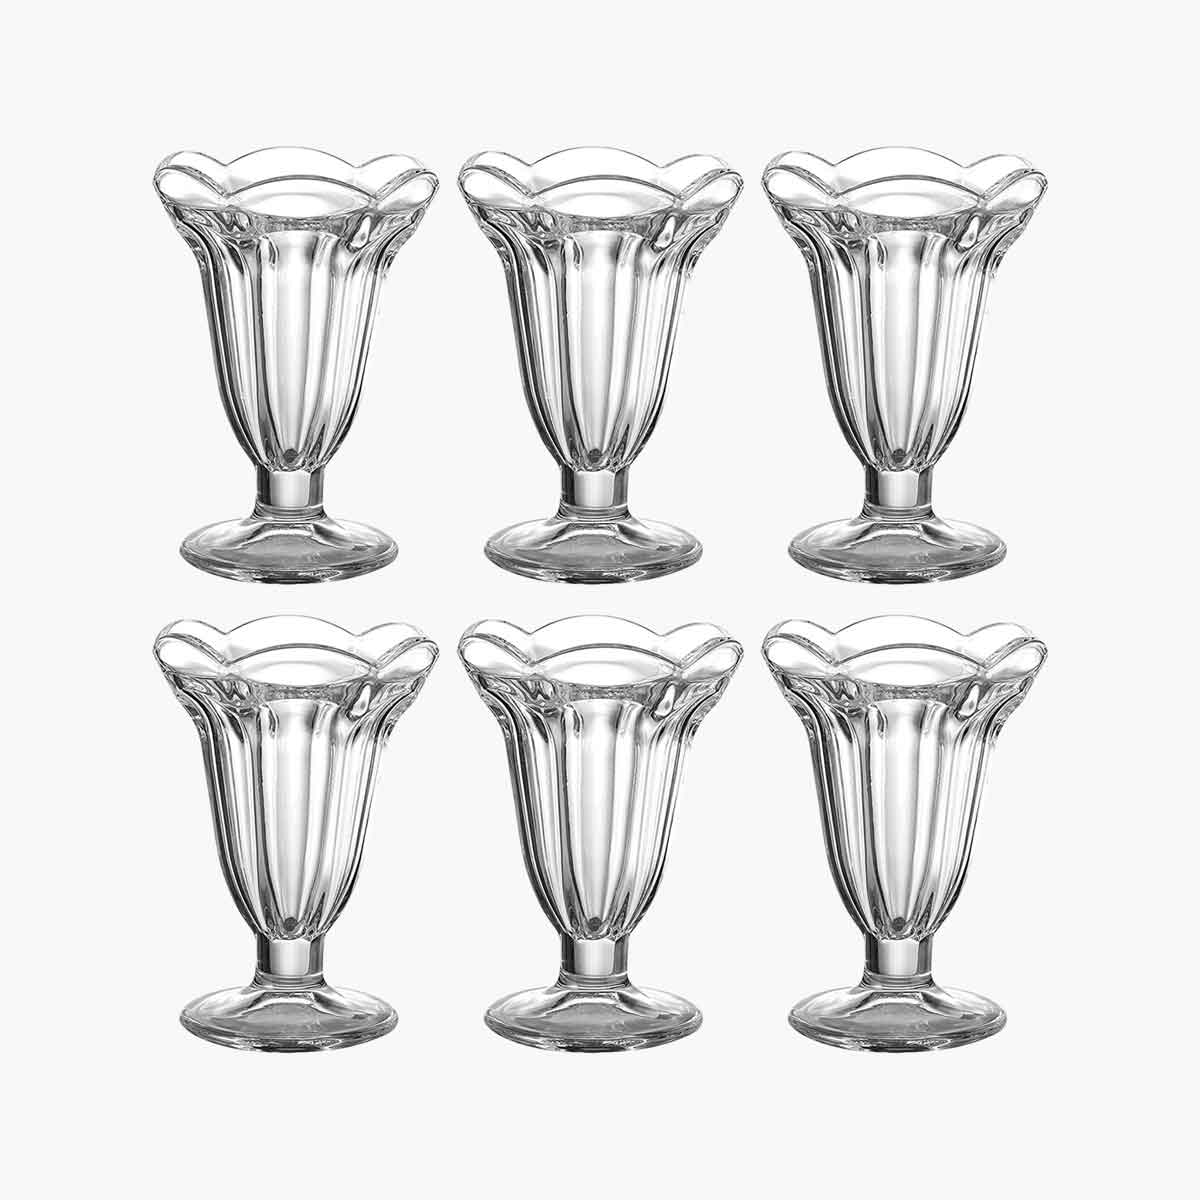 Six tulip sundae glasses.